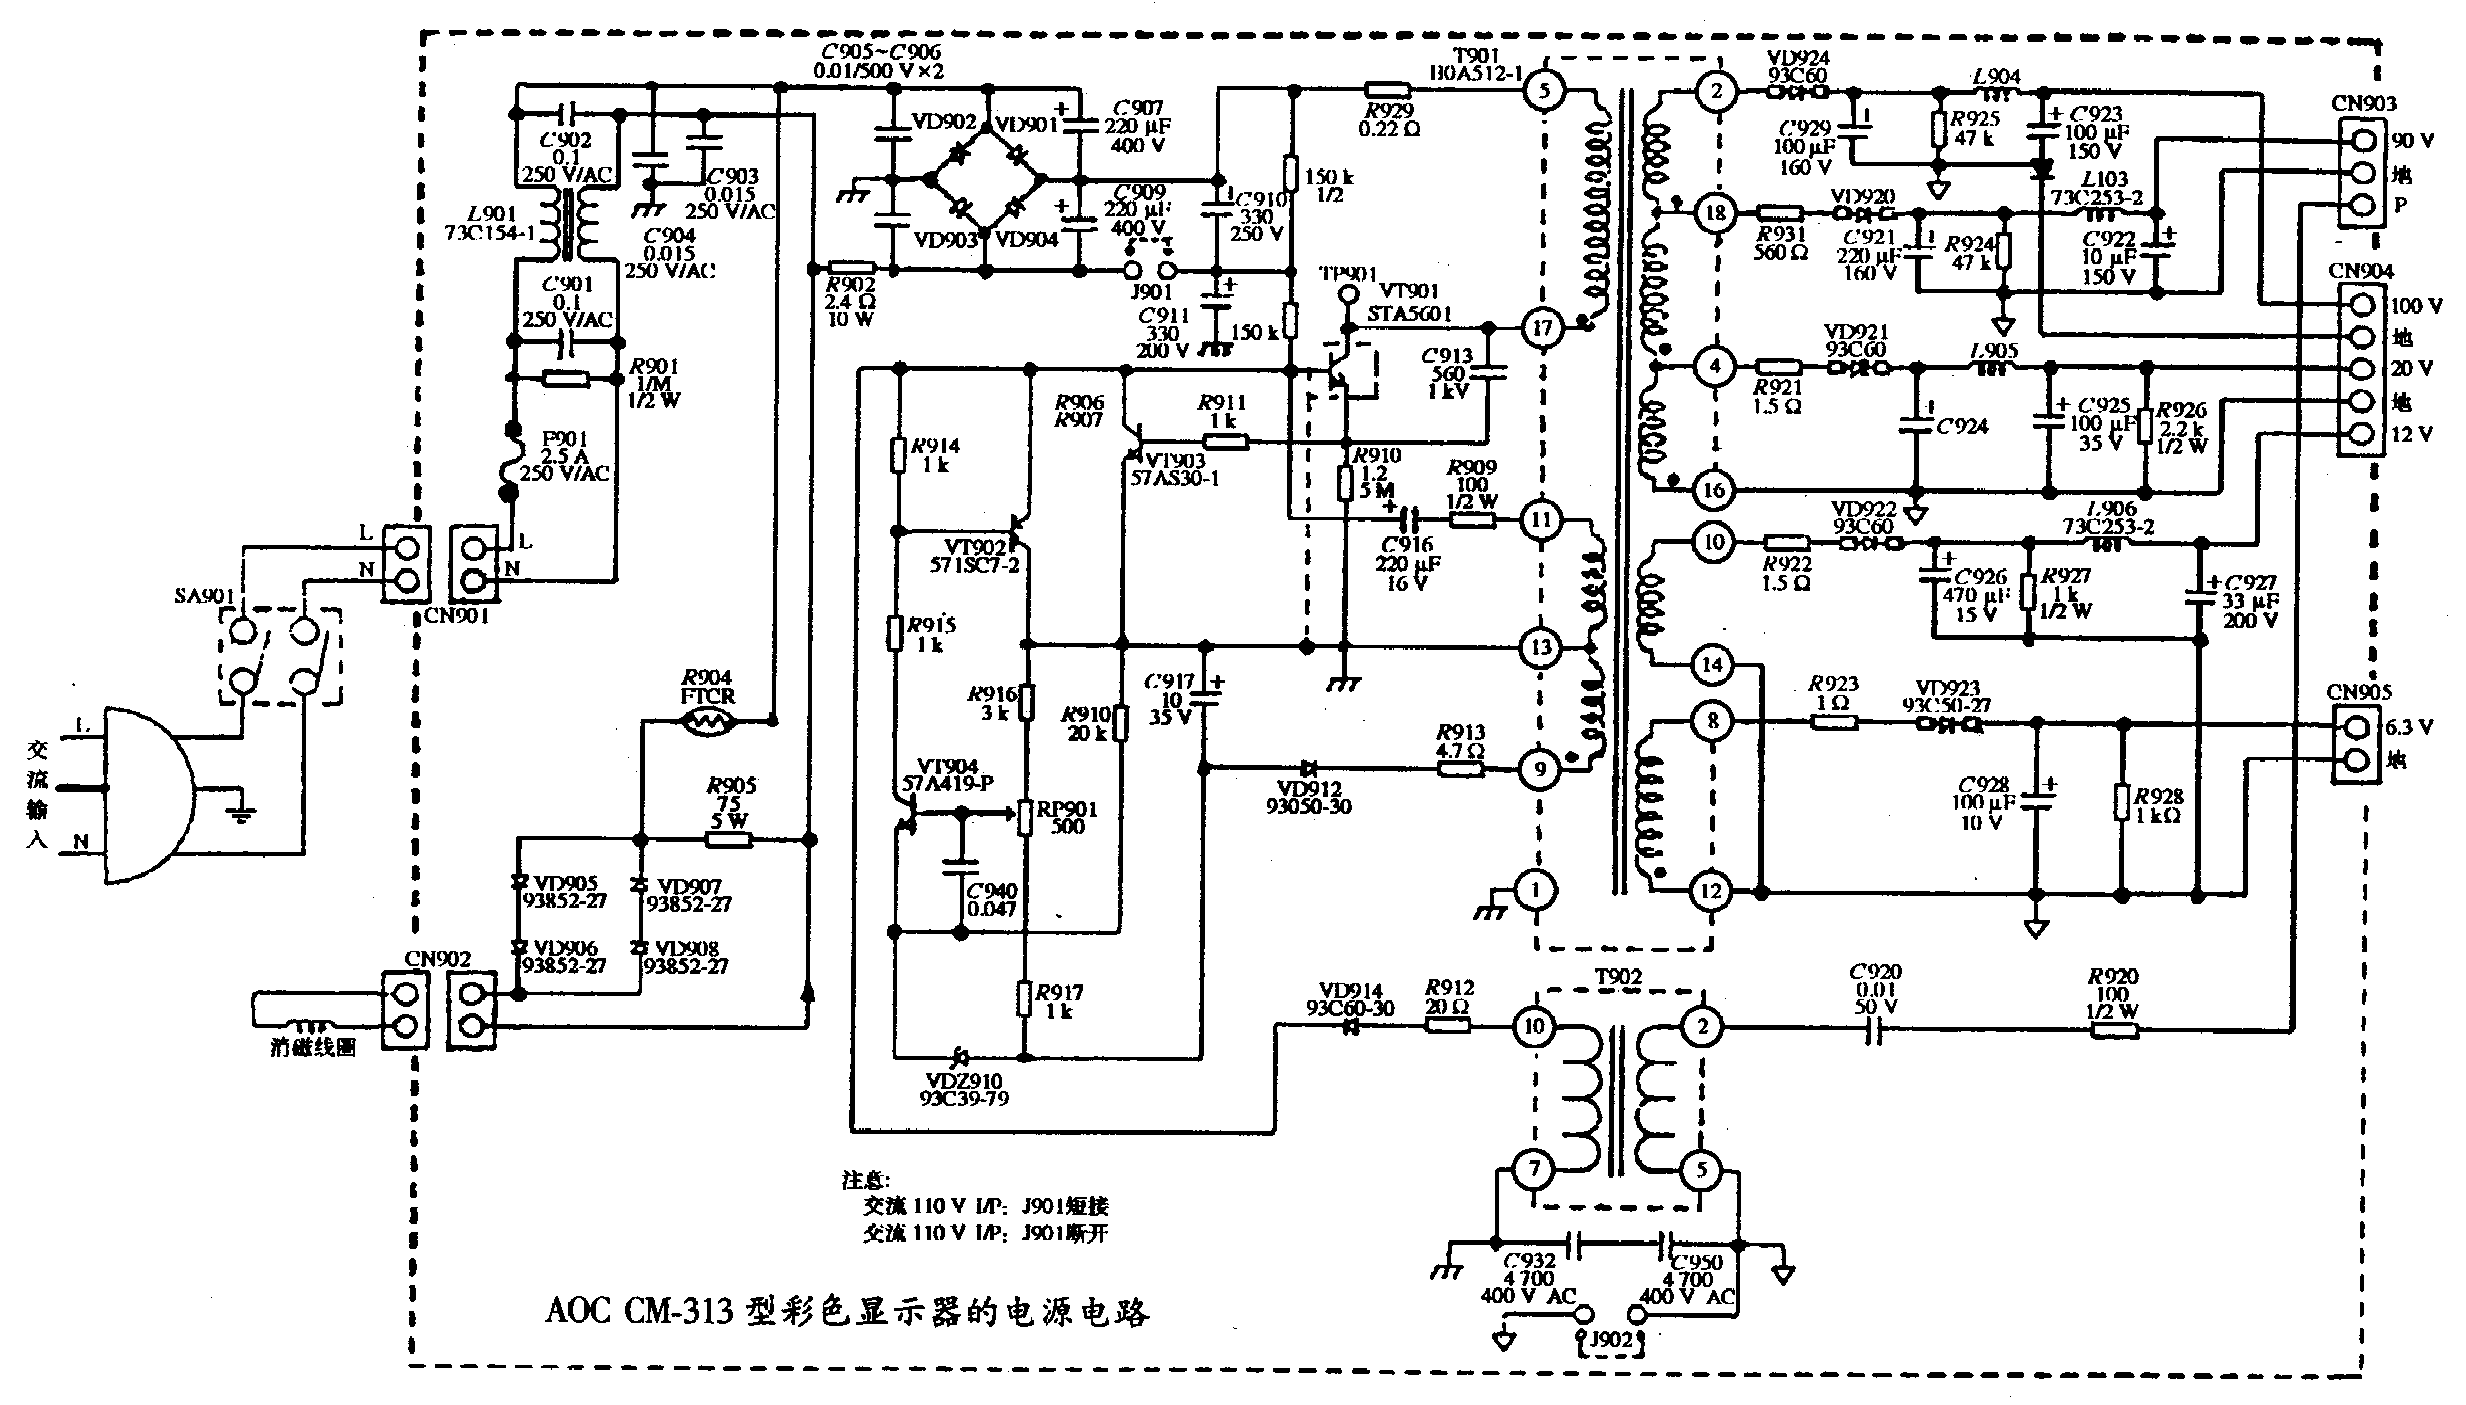 AOC CM-313型彩色显示器的电源电路.gif